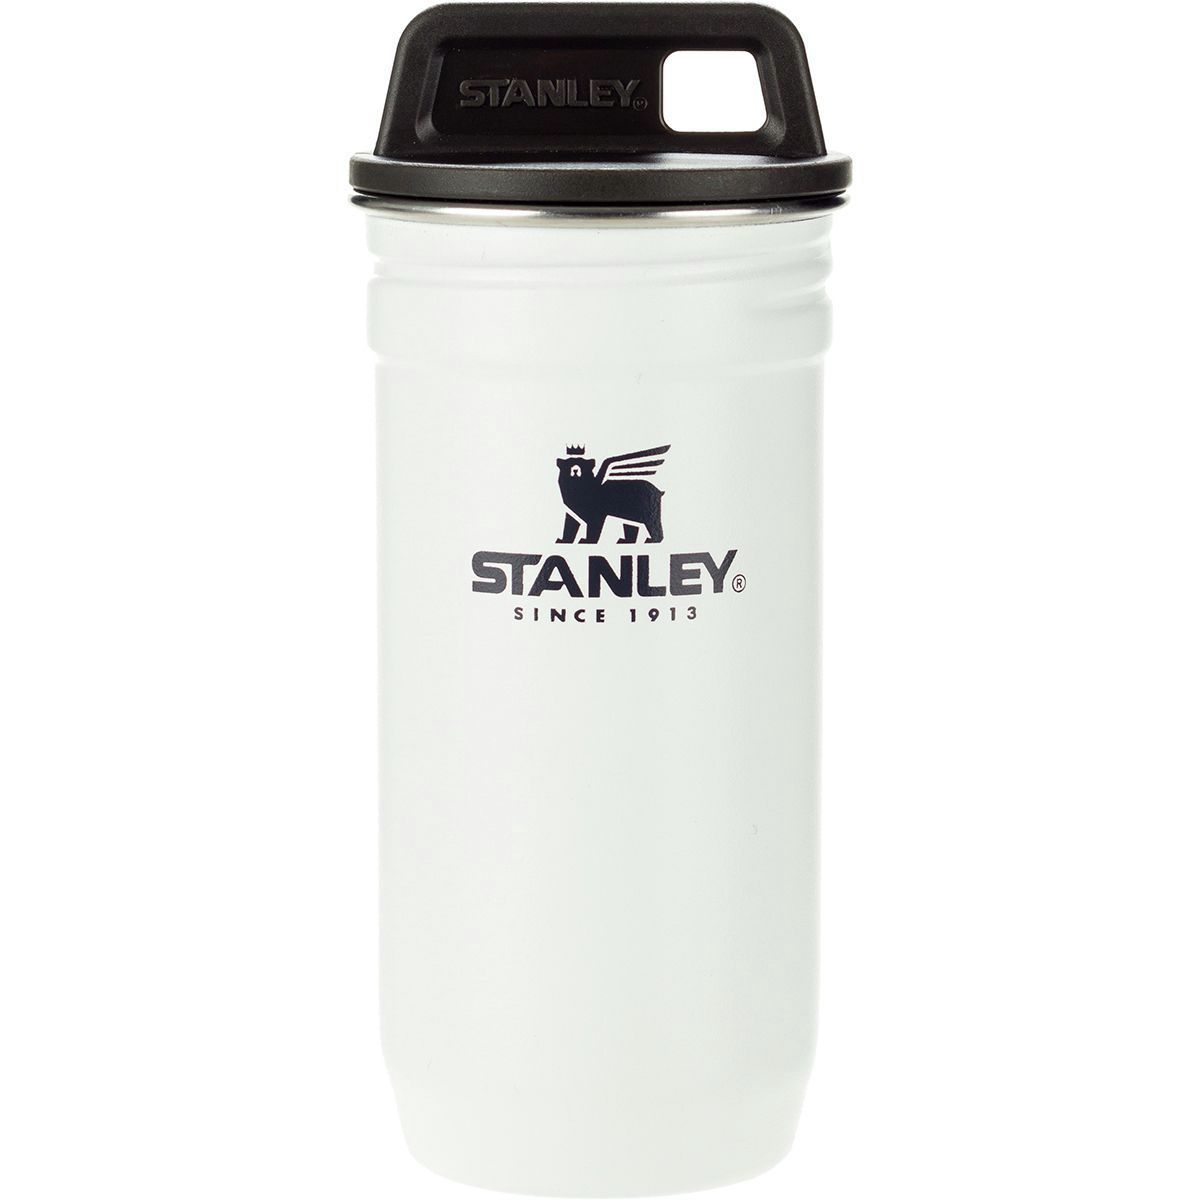 Stanley Adventure Flask Set